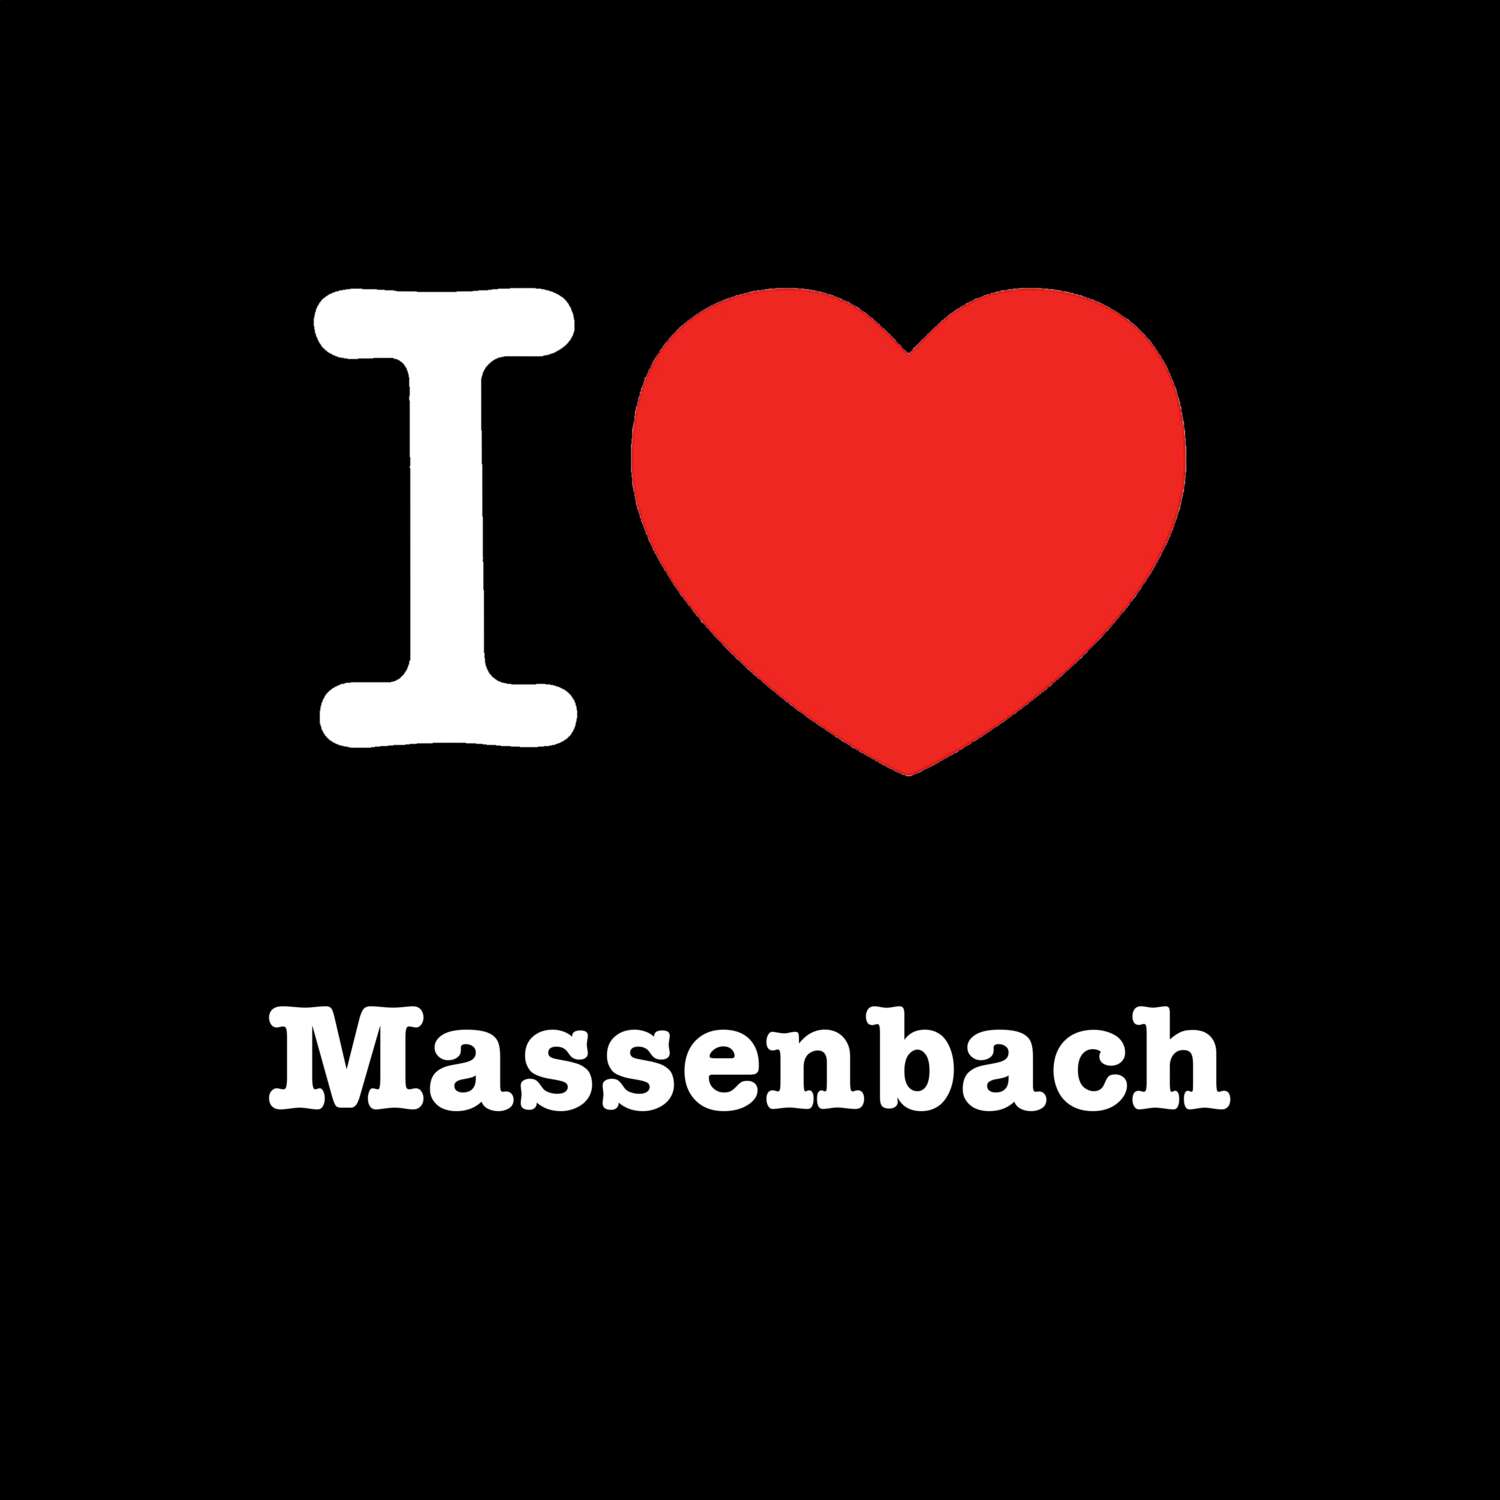 Massenbach T-Shirt »I love«